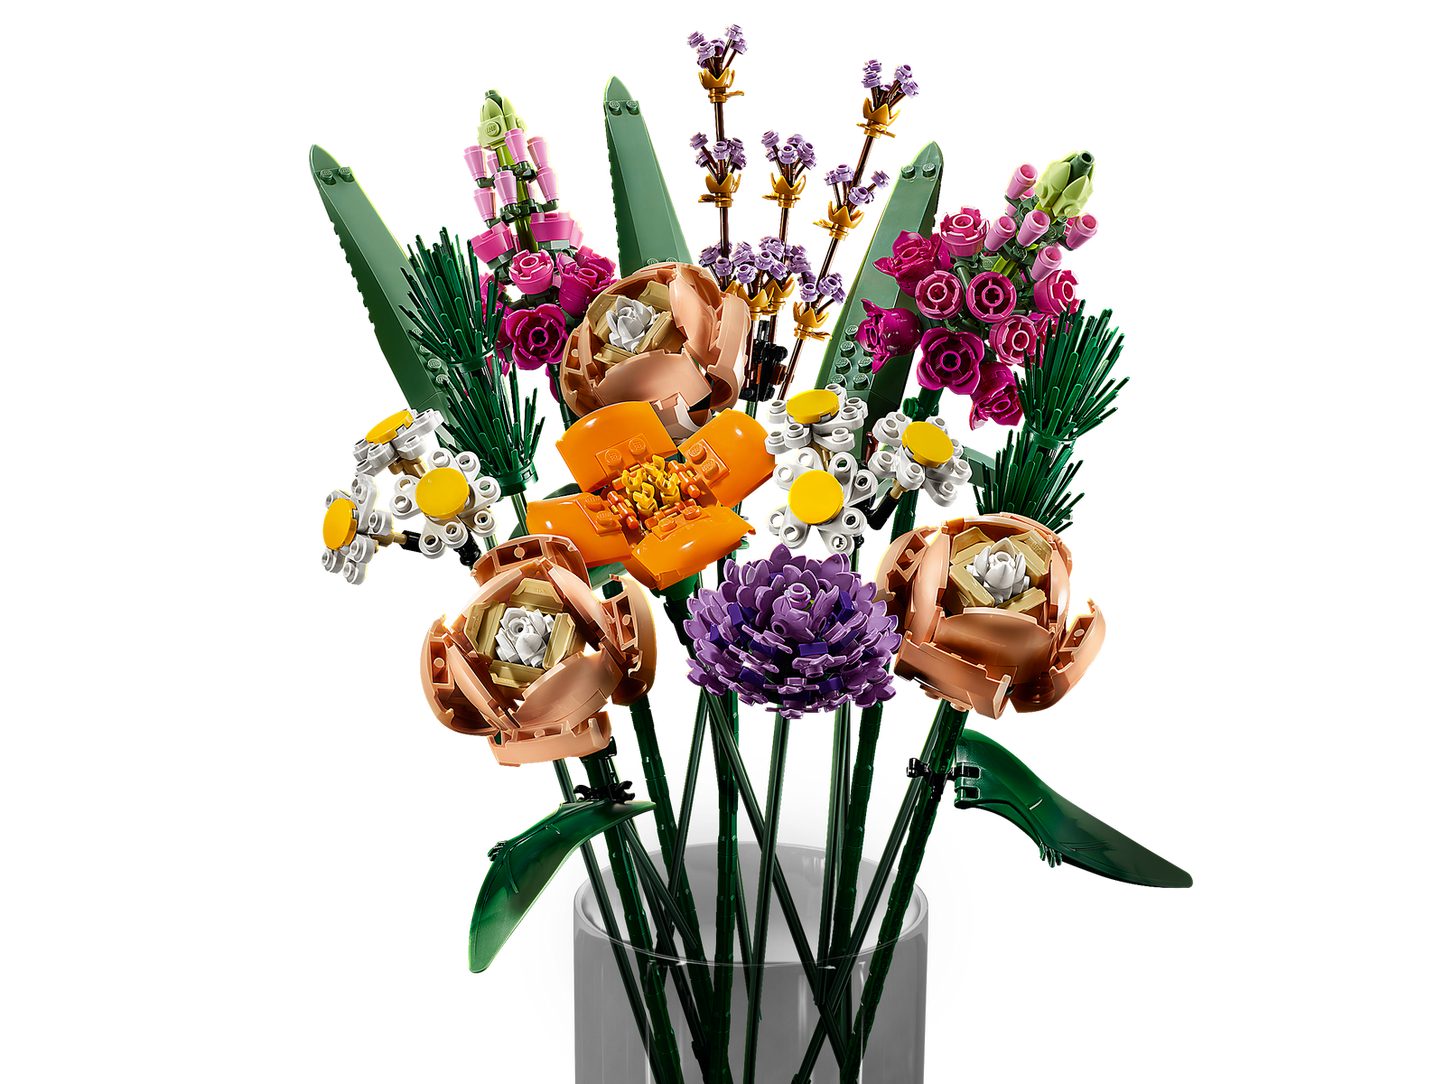 LEGO Creator Flower Bouquet 10280